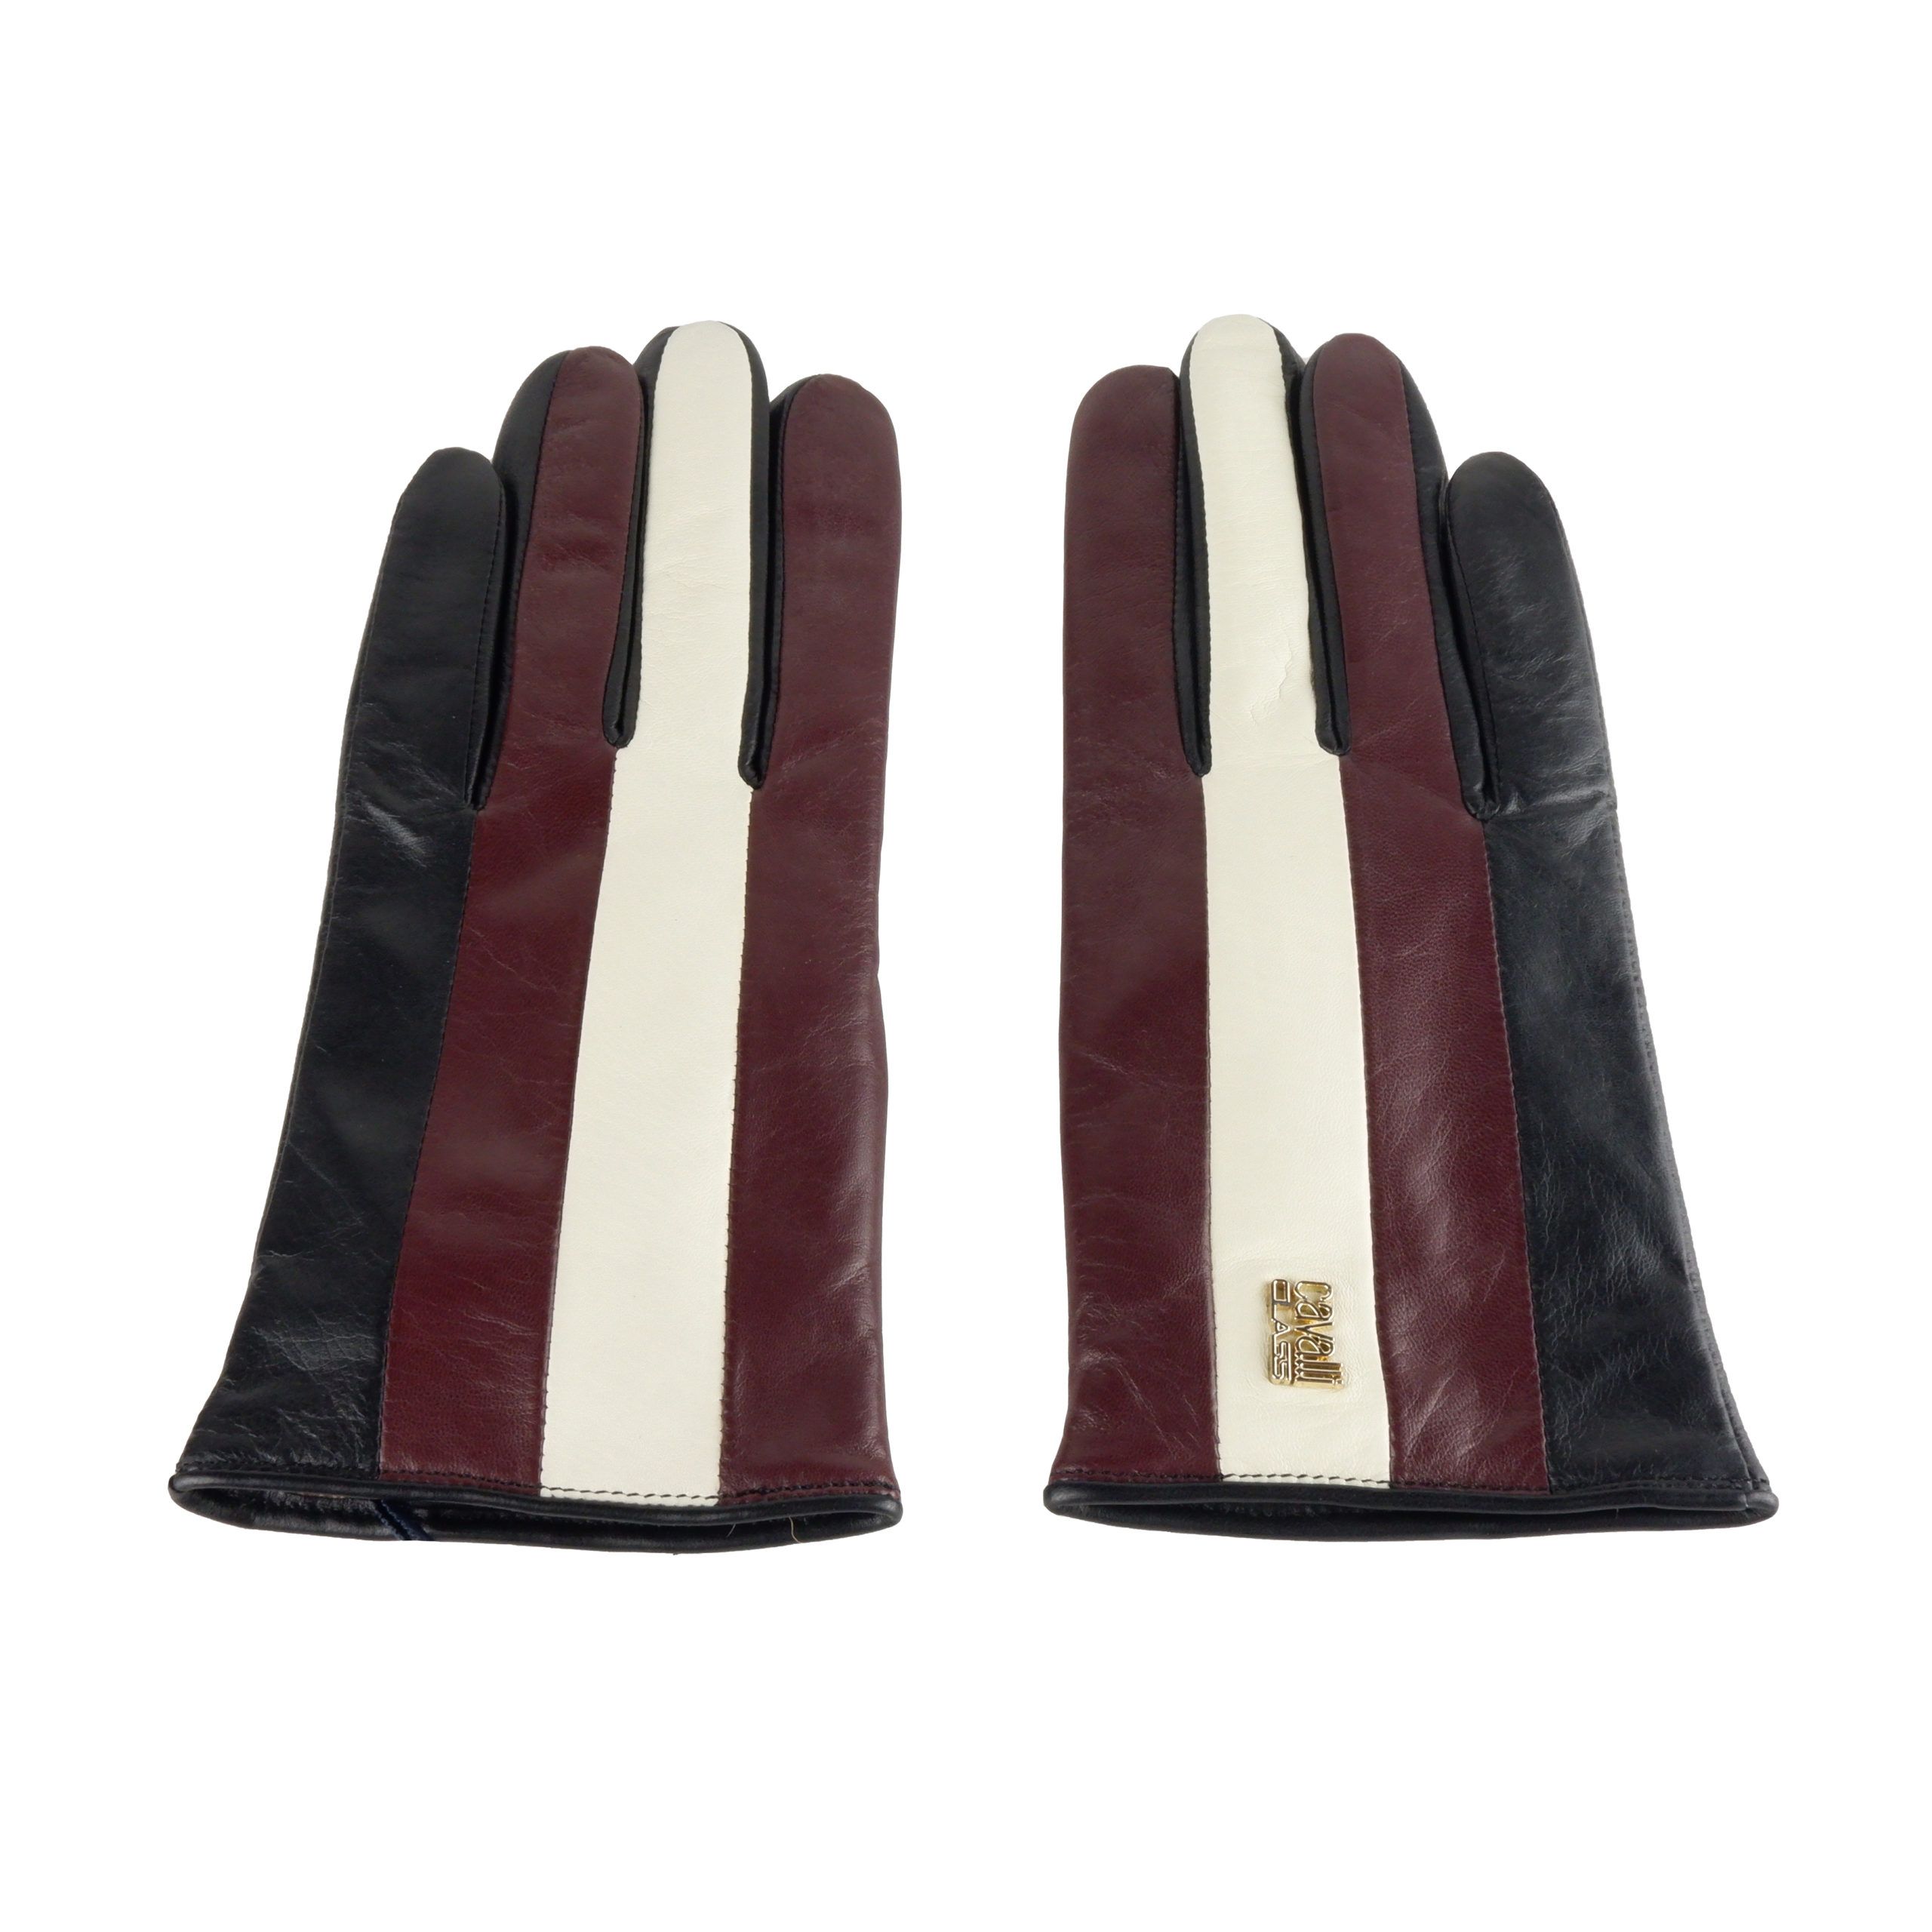 Elegant Lambskin Leather Gloves